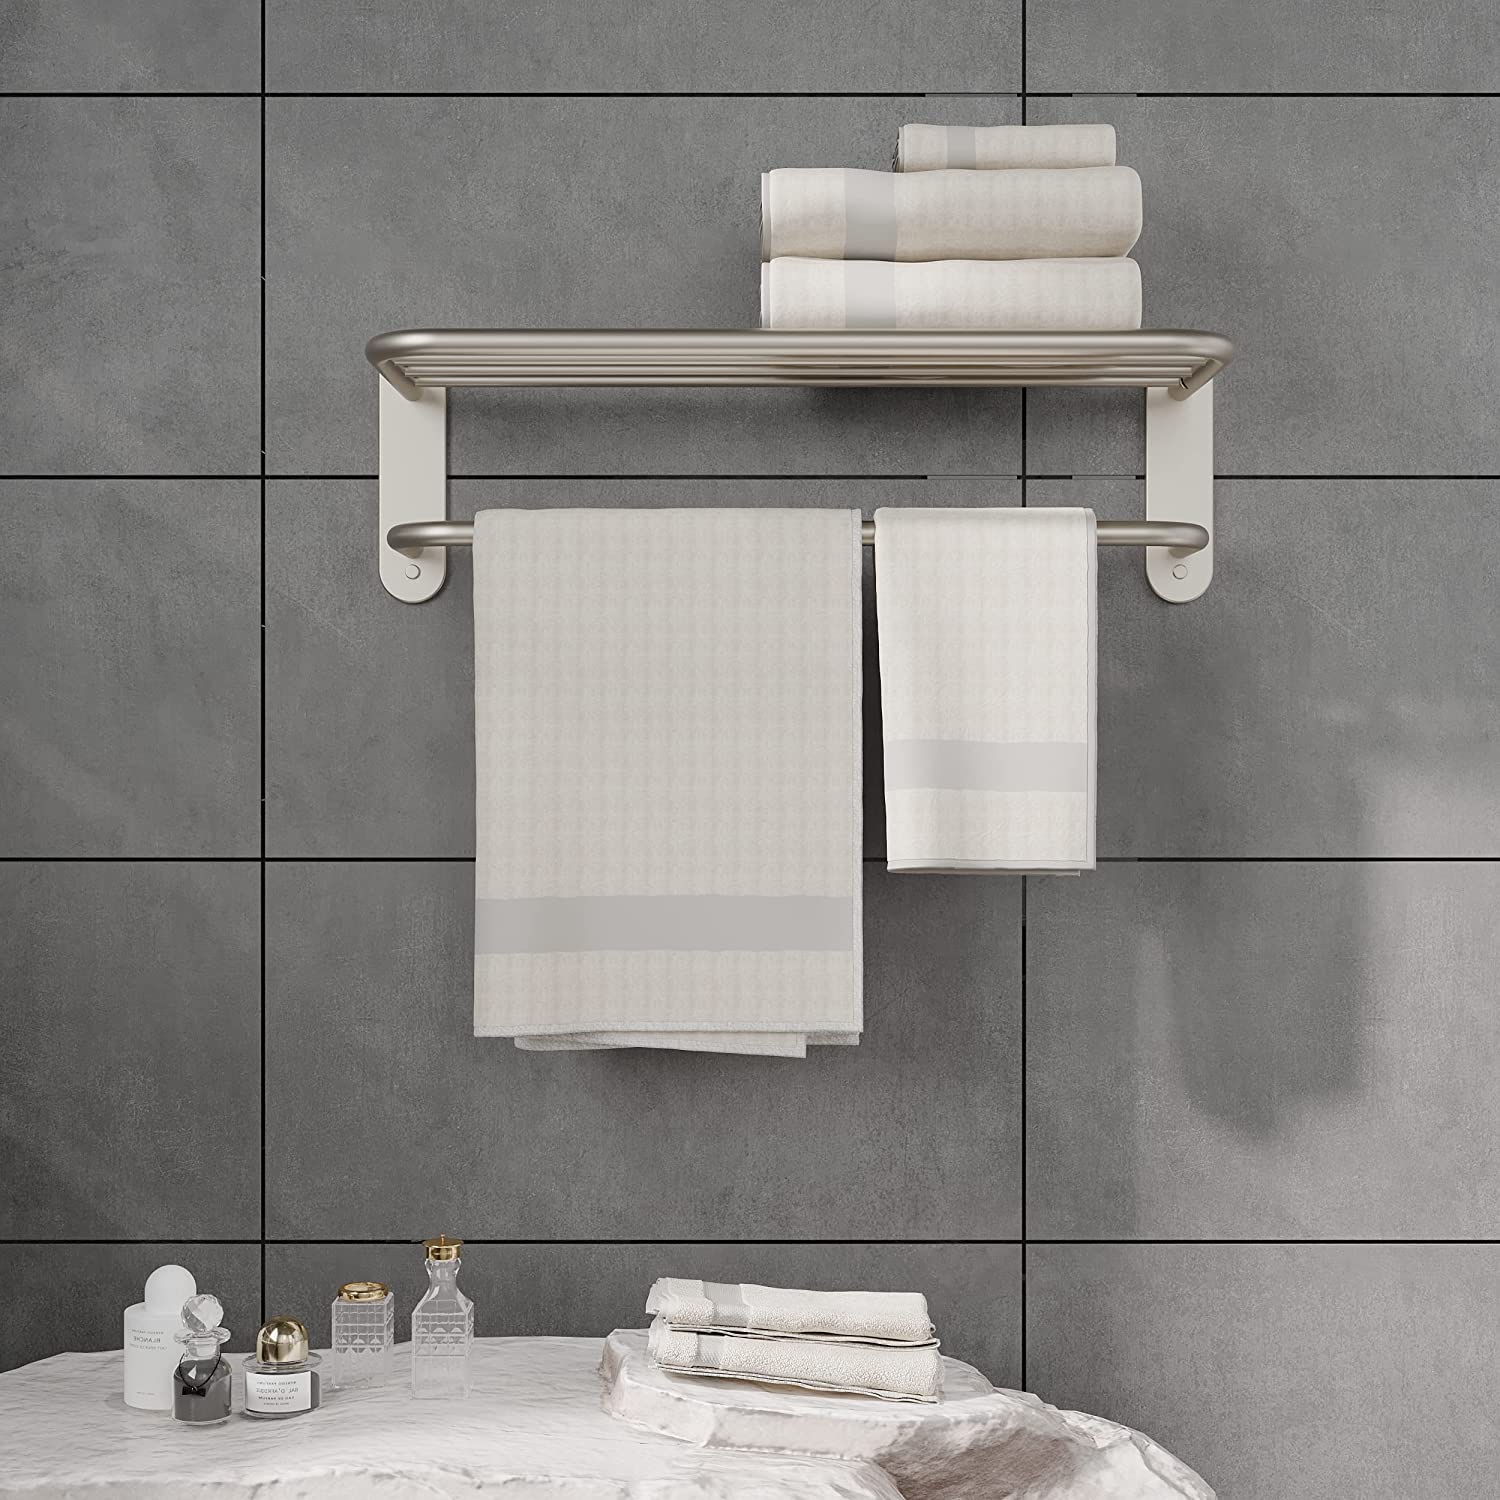 18'' Bathroom Wall Mount Towel Rack Shelf with a Towel Bar, Brushed Nickel,  by Fixsen